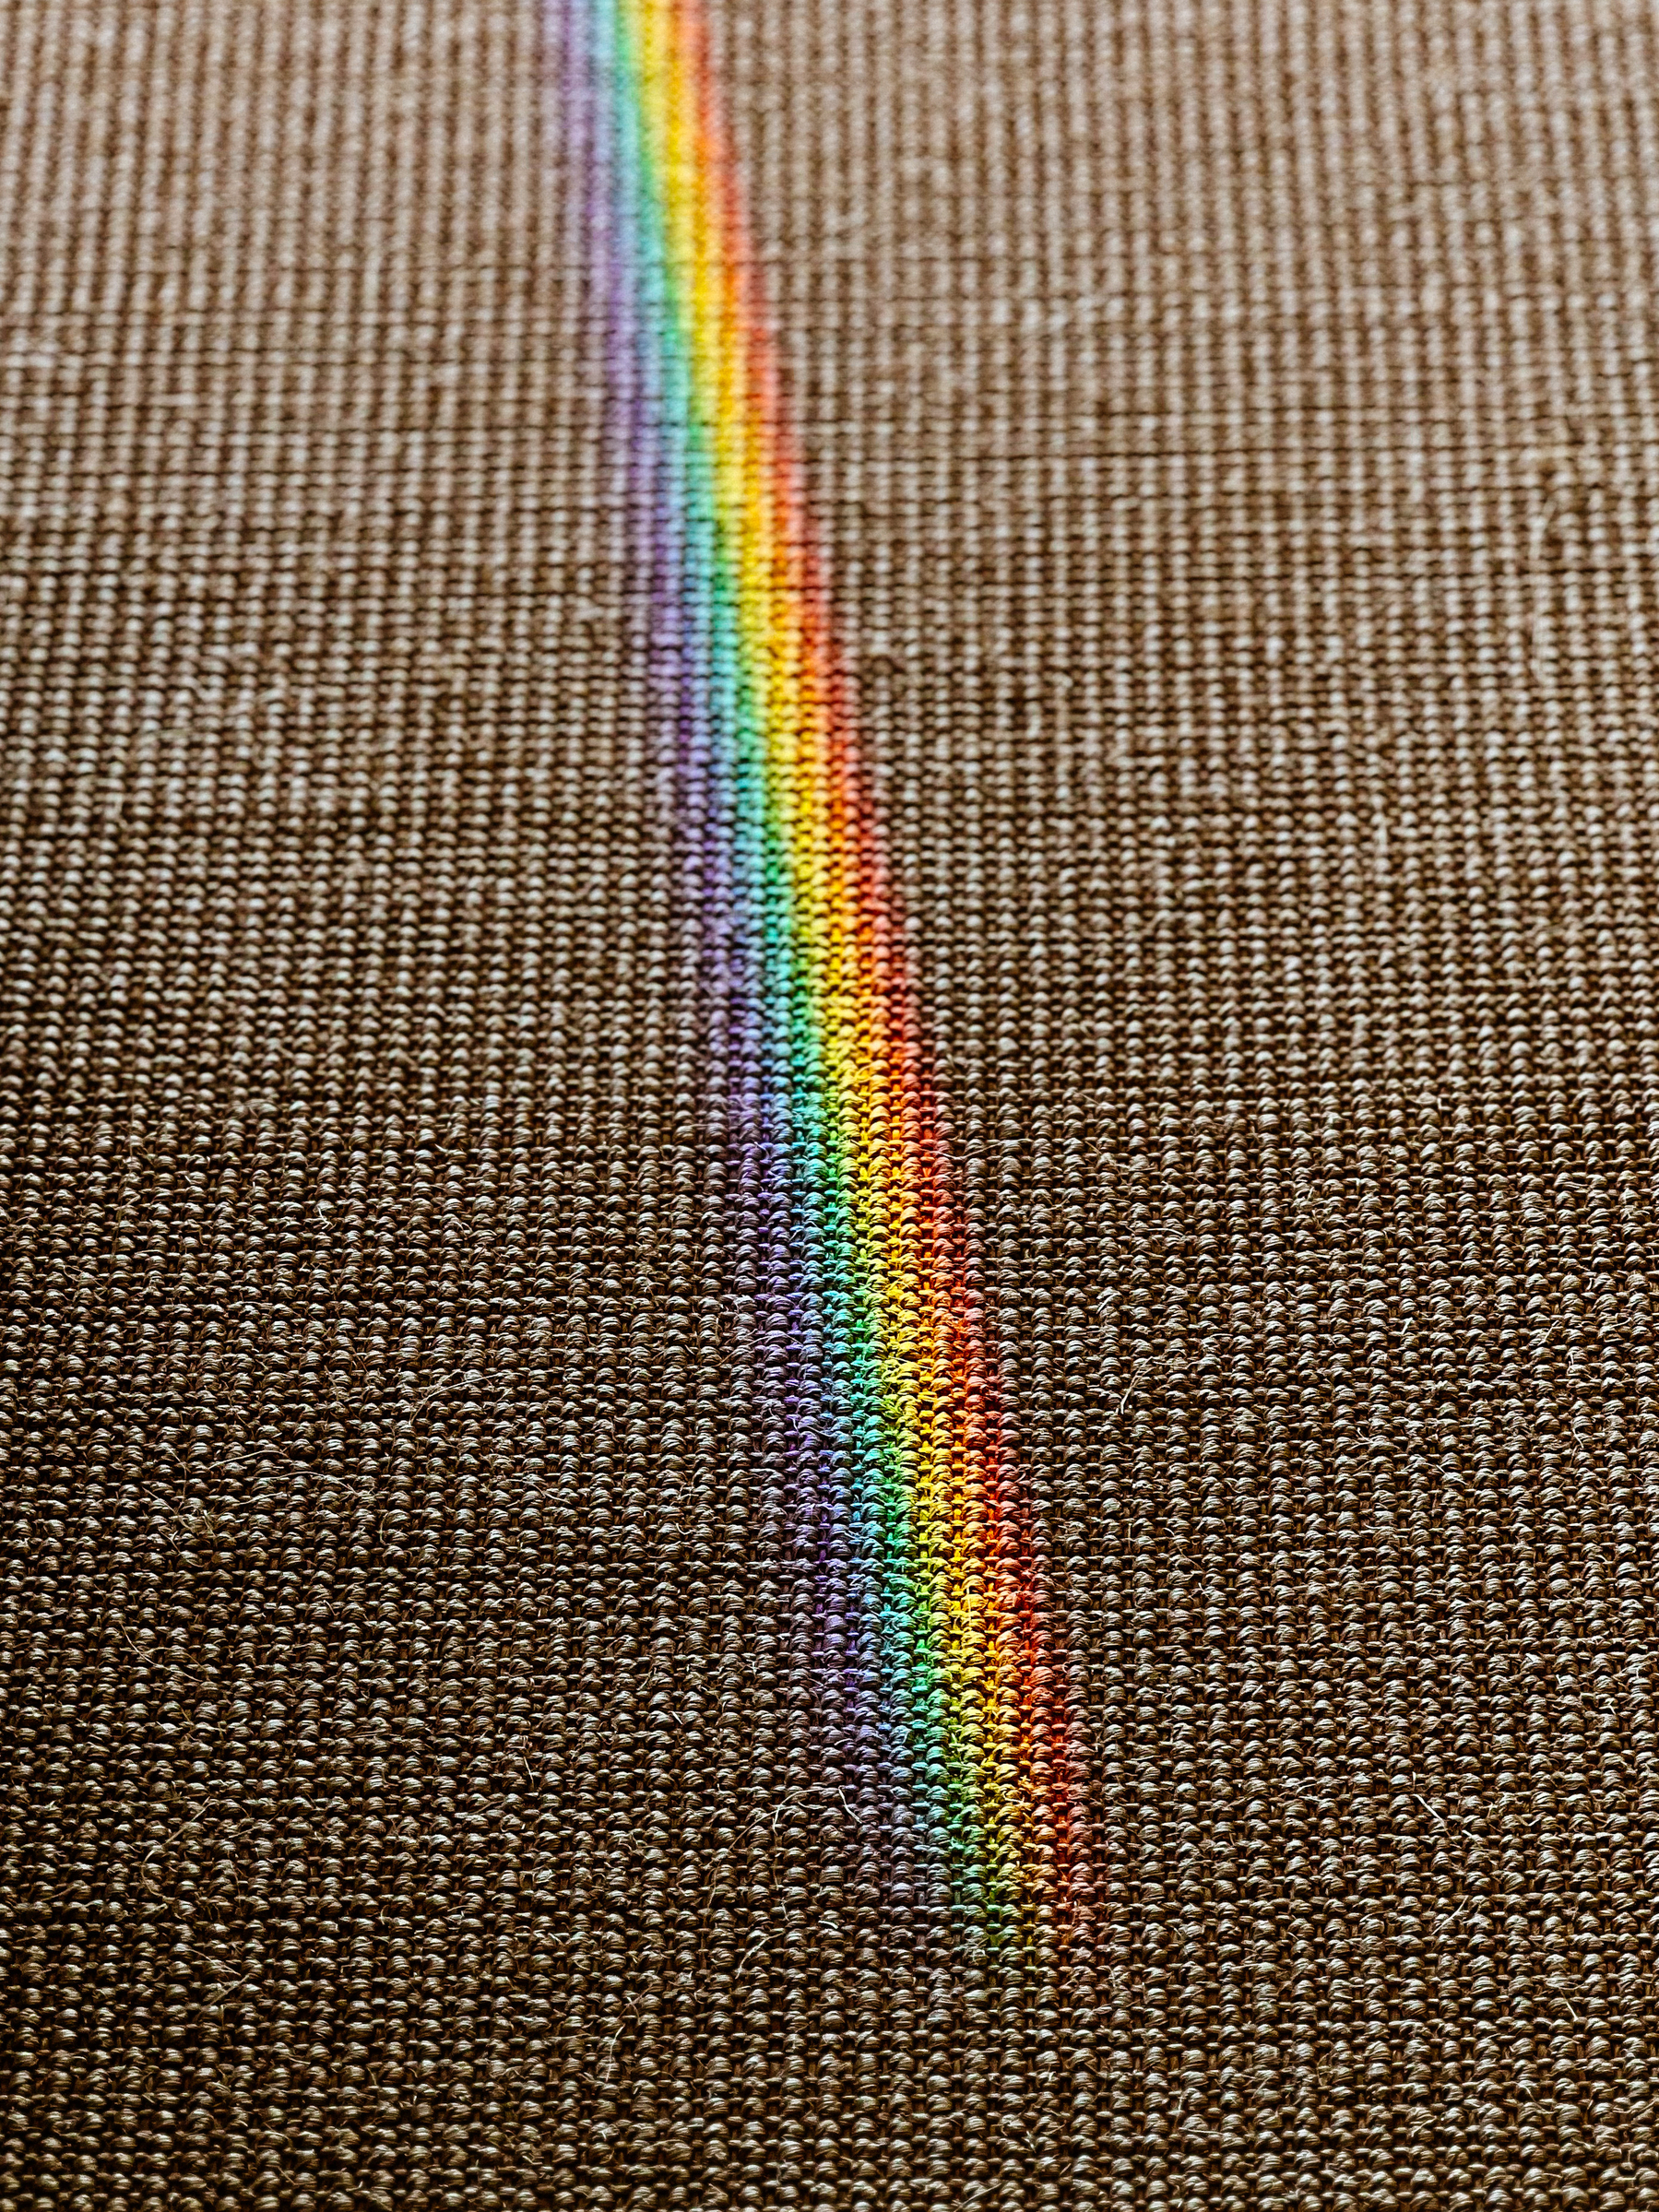 A rainbow is seen on the carpeted floor. 